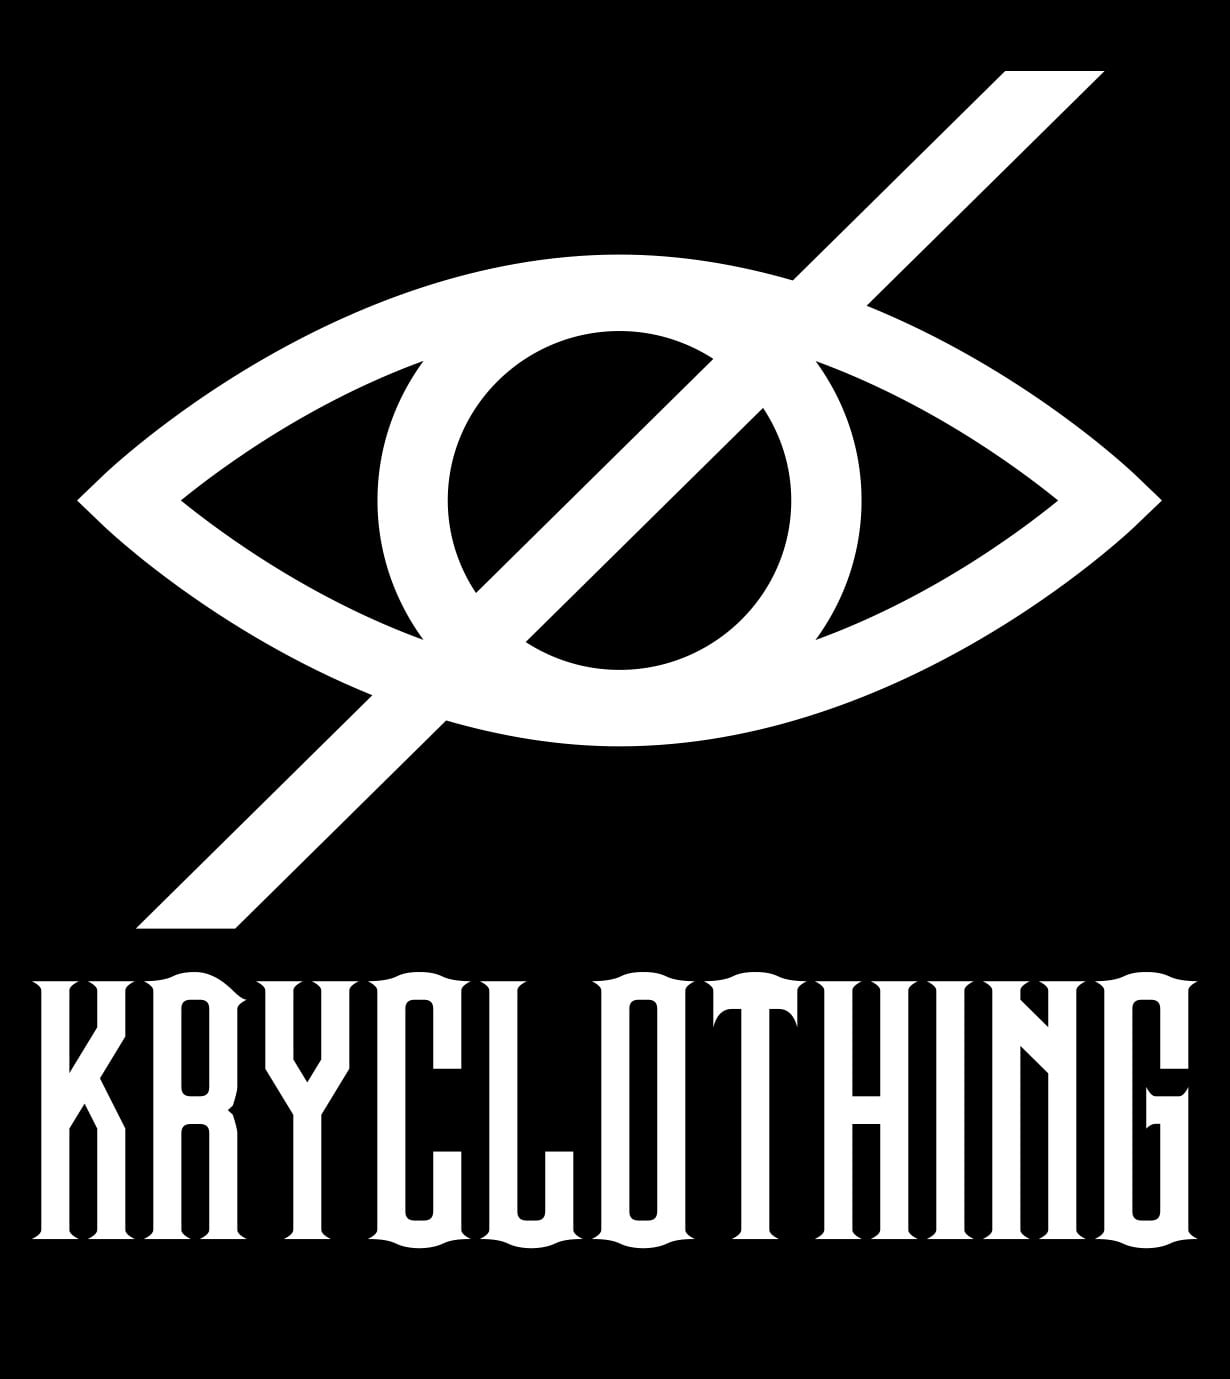 「注意事項」 | KRY clothing powered by BASE